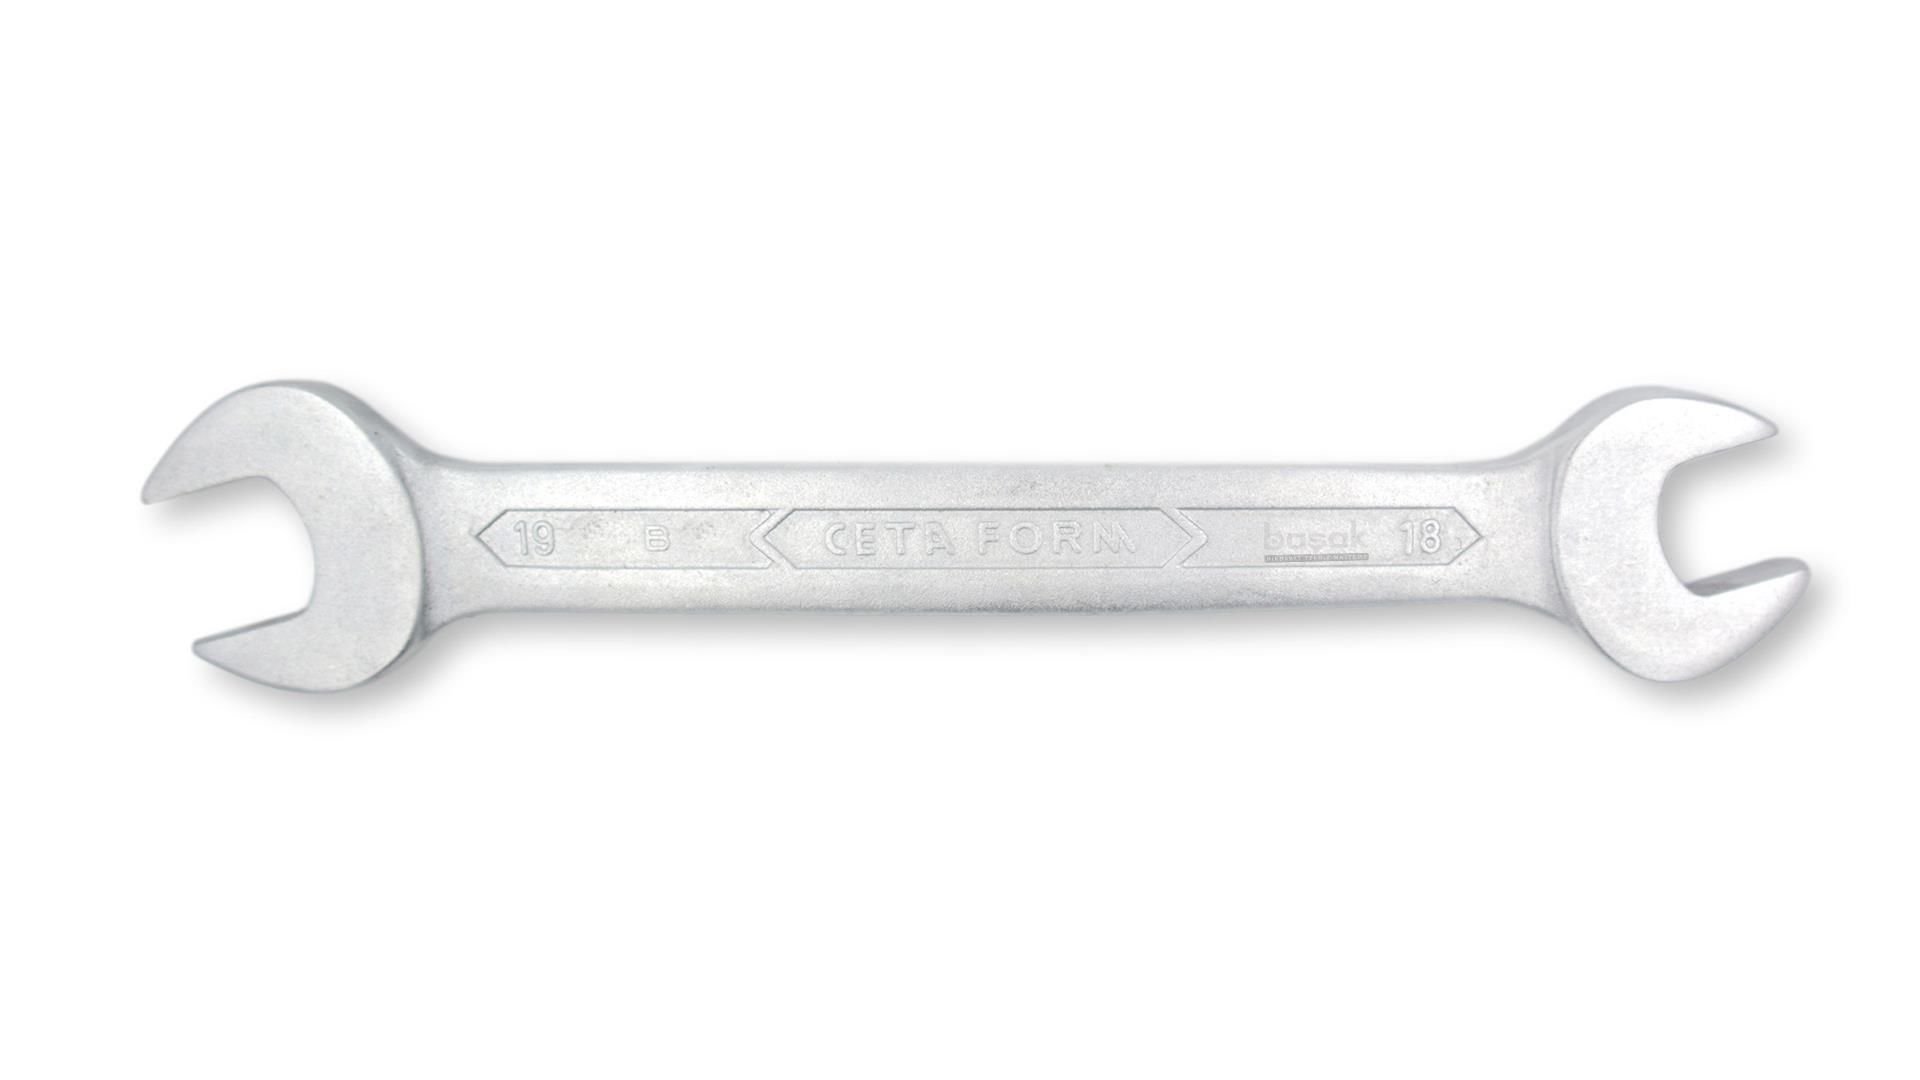 Ceta Form 17 x 19 mm Açık Ağız Anahtar B10-1719